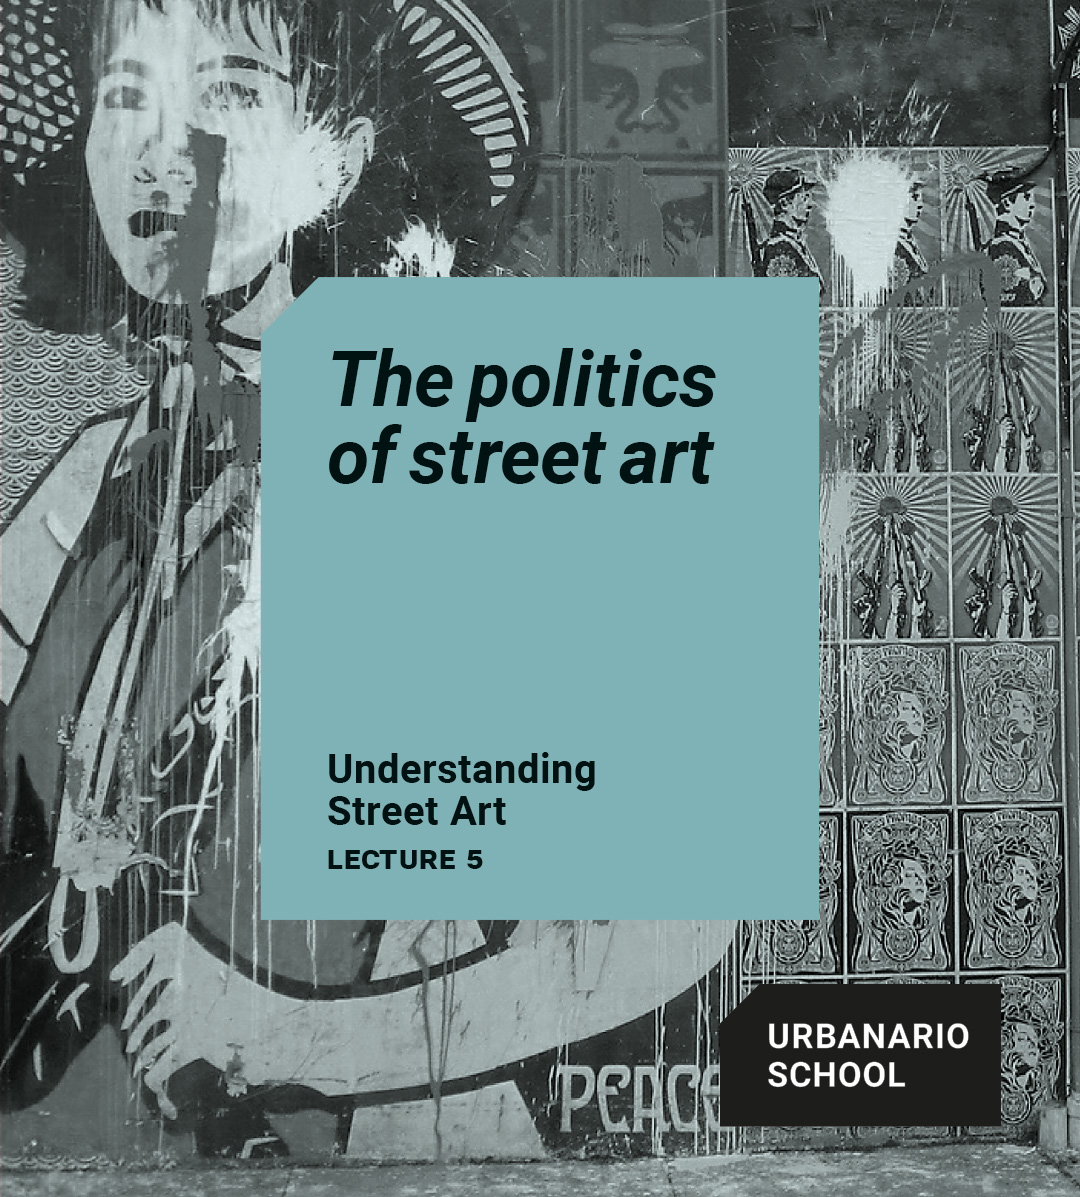 The politics of street art - Urbanario School